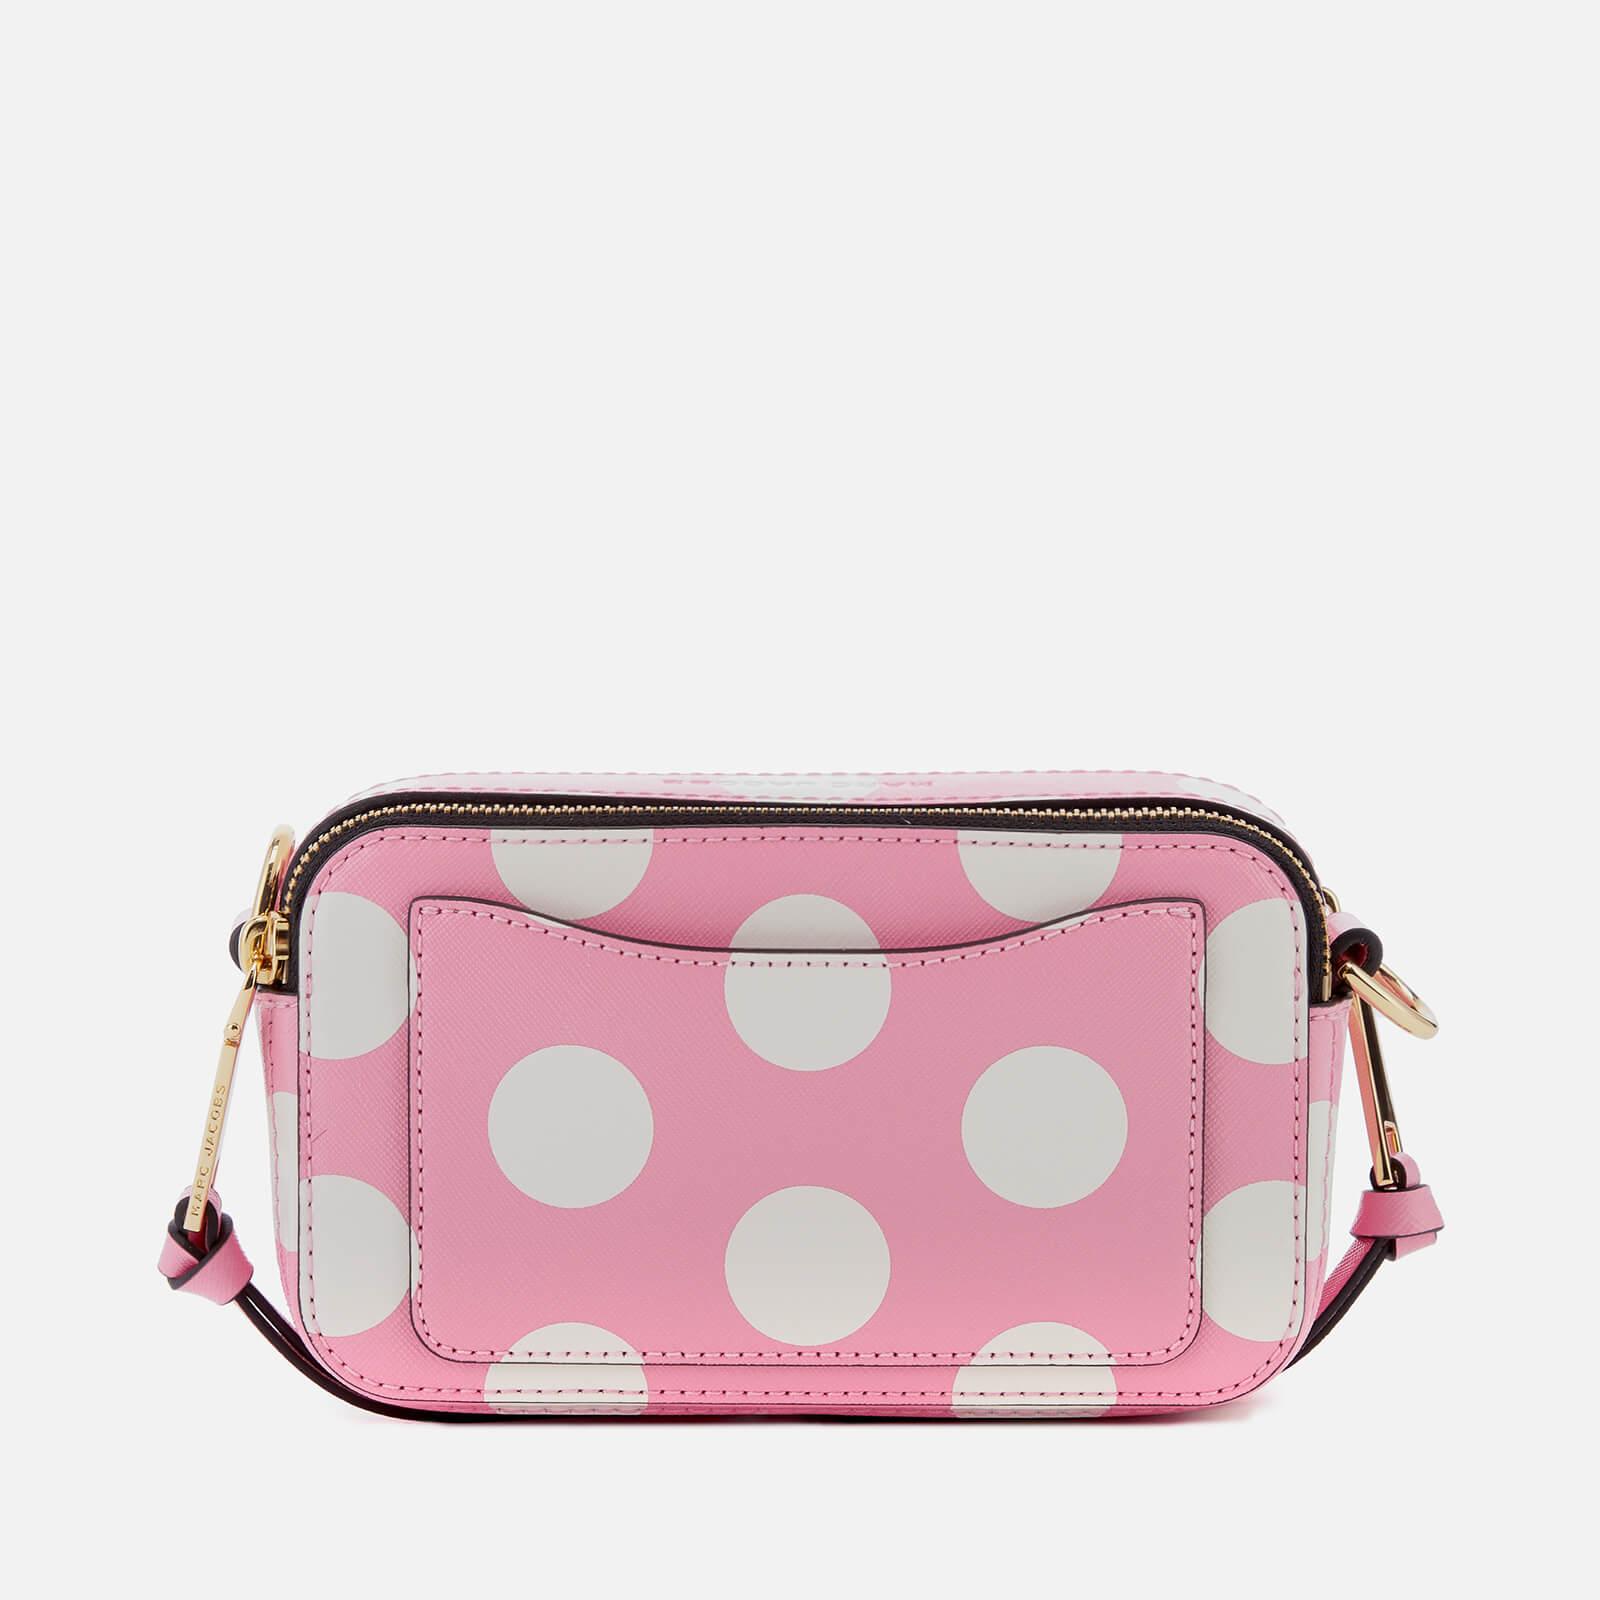 Cross body bags Marc Jacobs - Sanpshot S polka dot pink camera bag